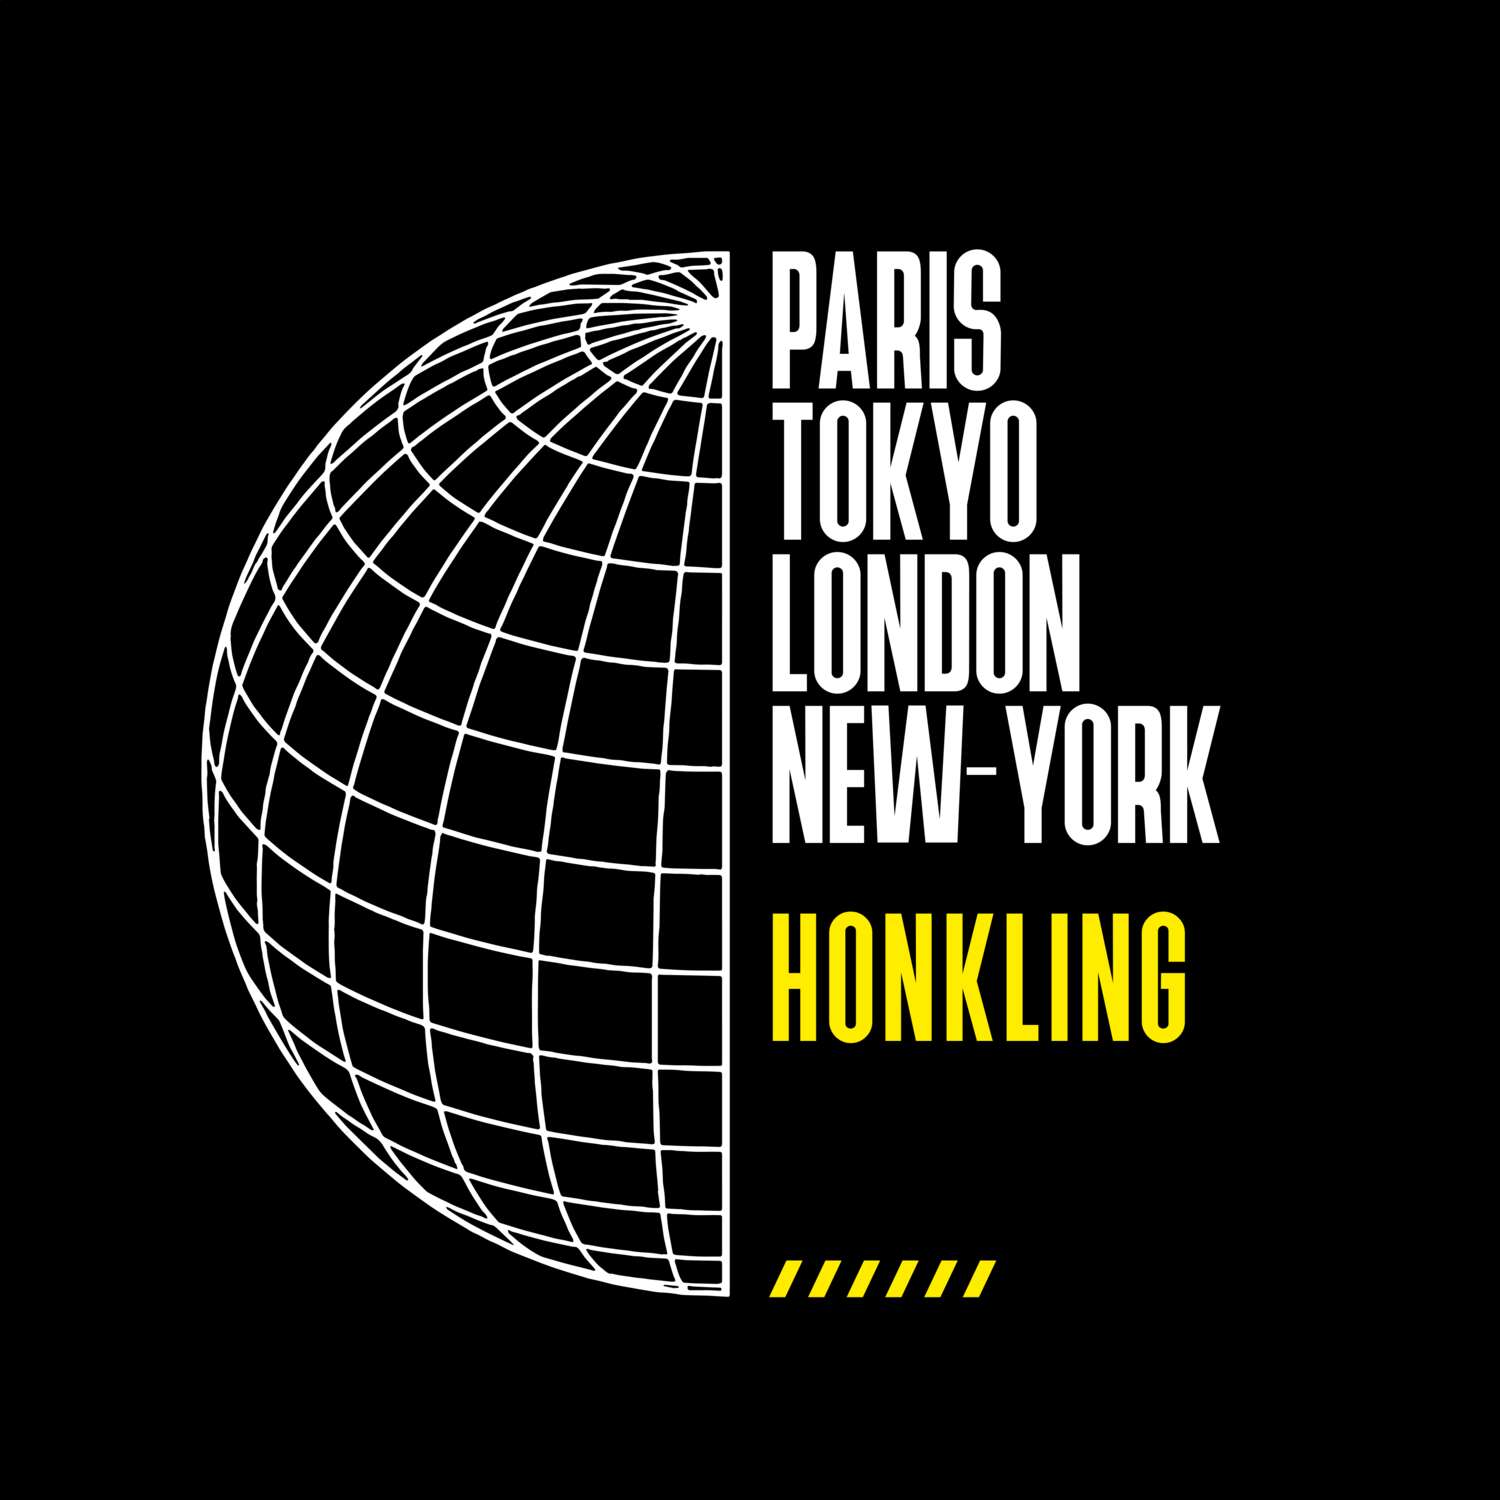 Honkling T-Shirt »Paris Tokyo London«